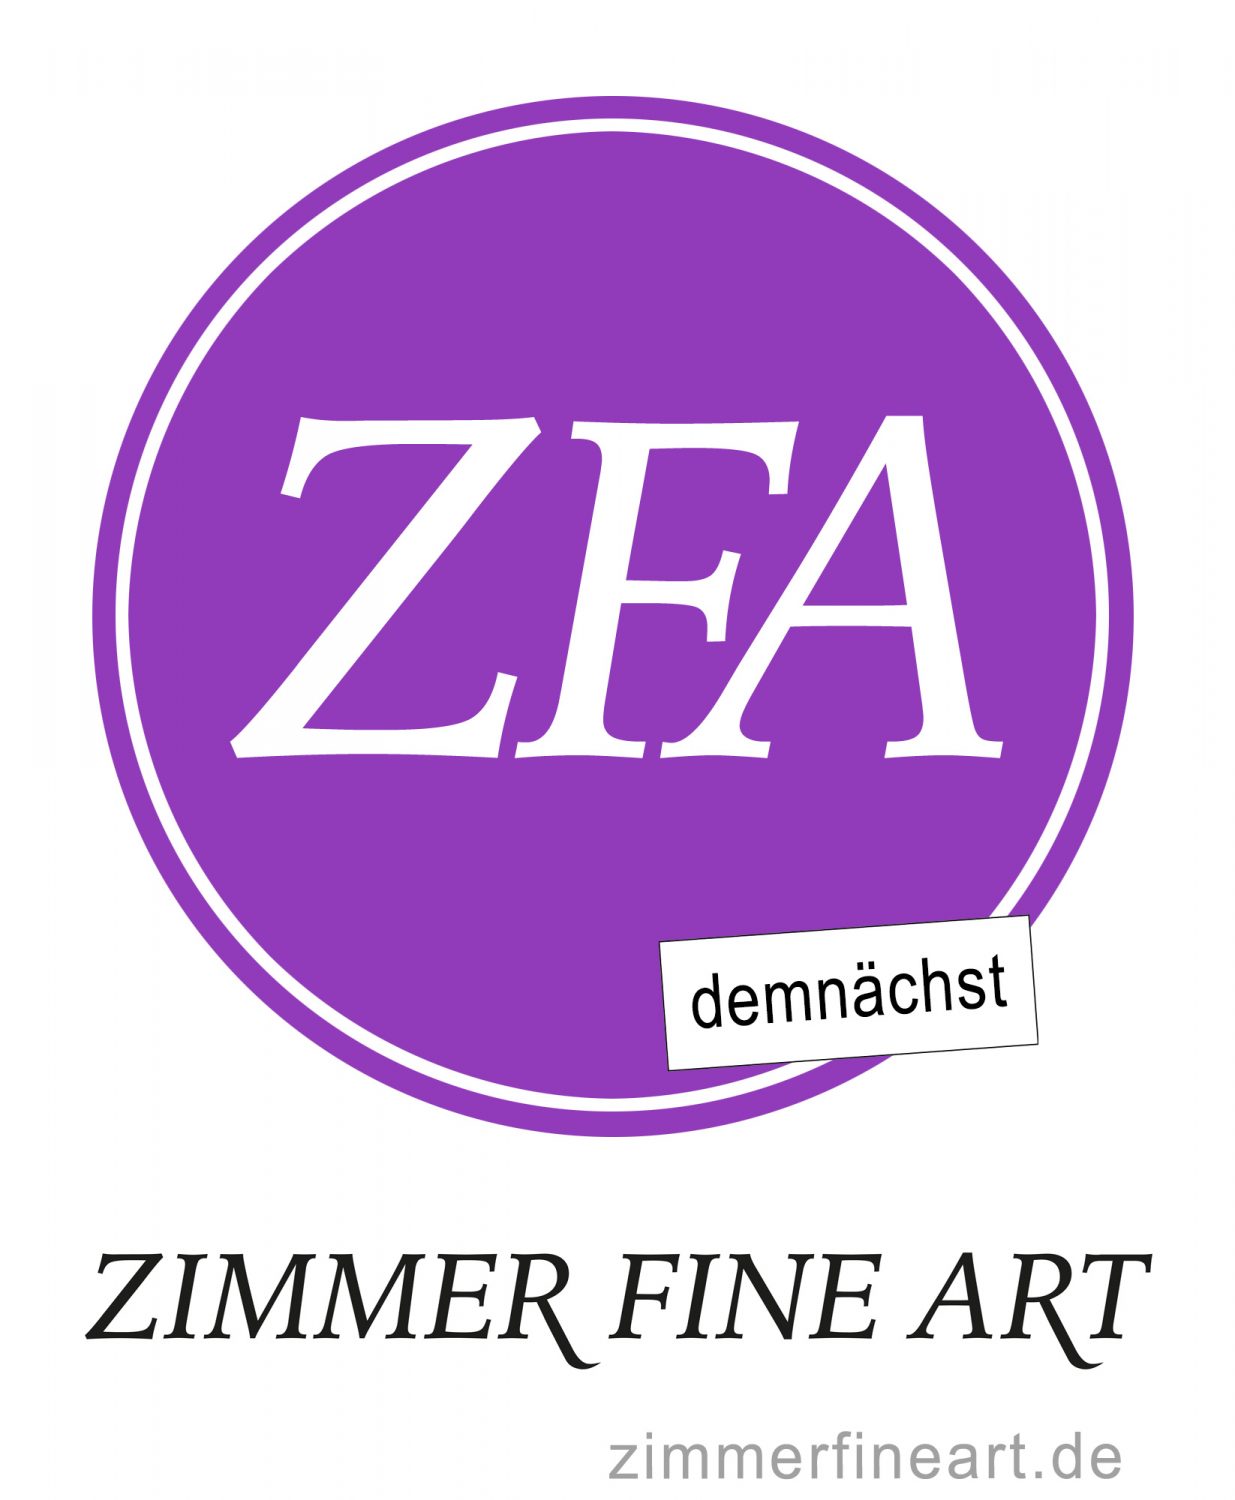 ZIMMER FINE ART soon